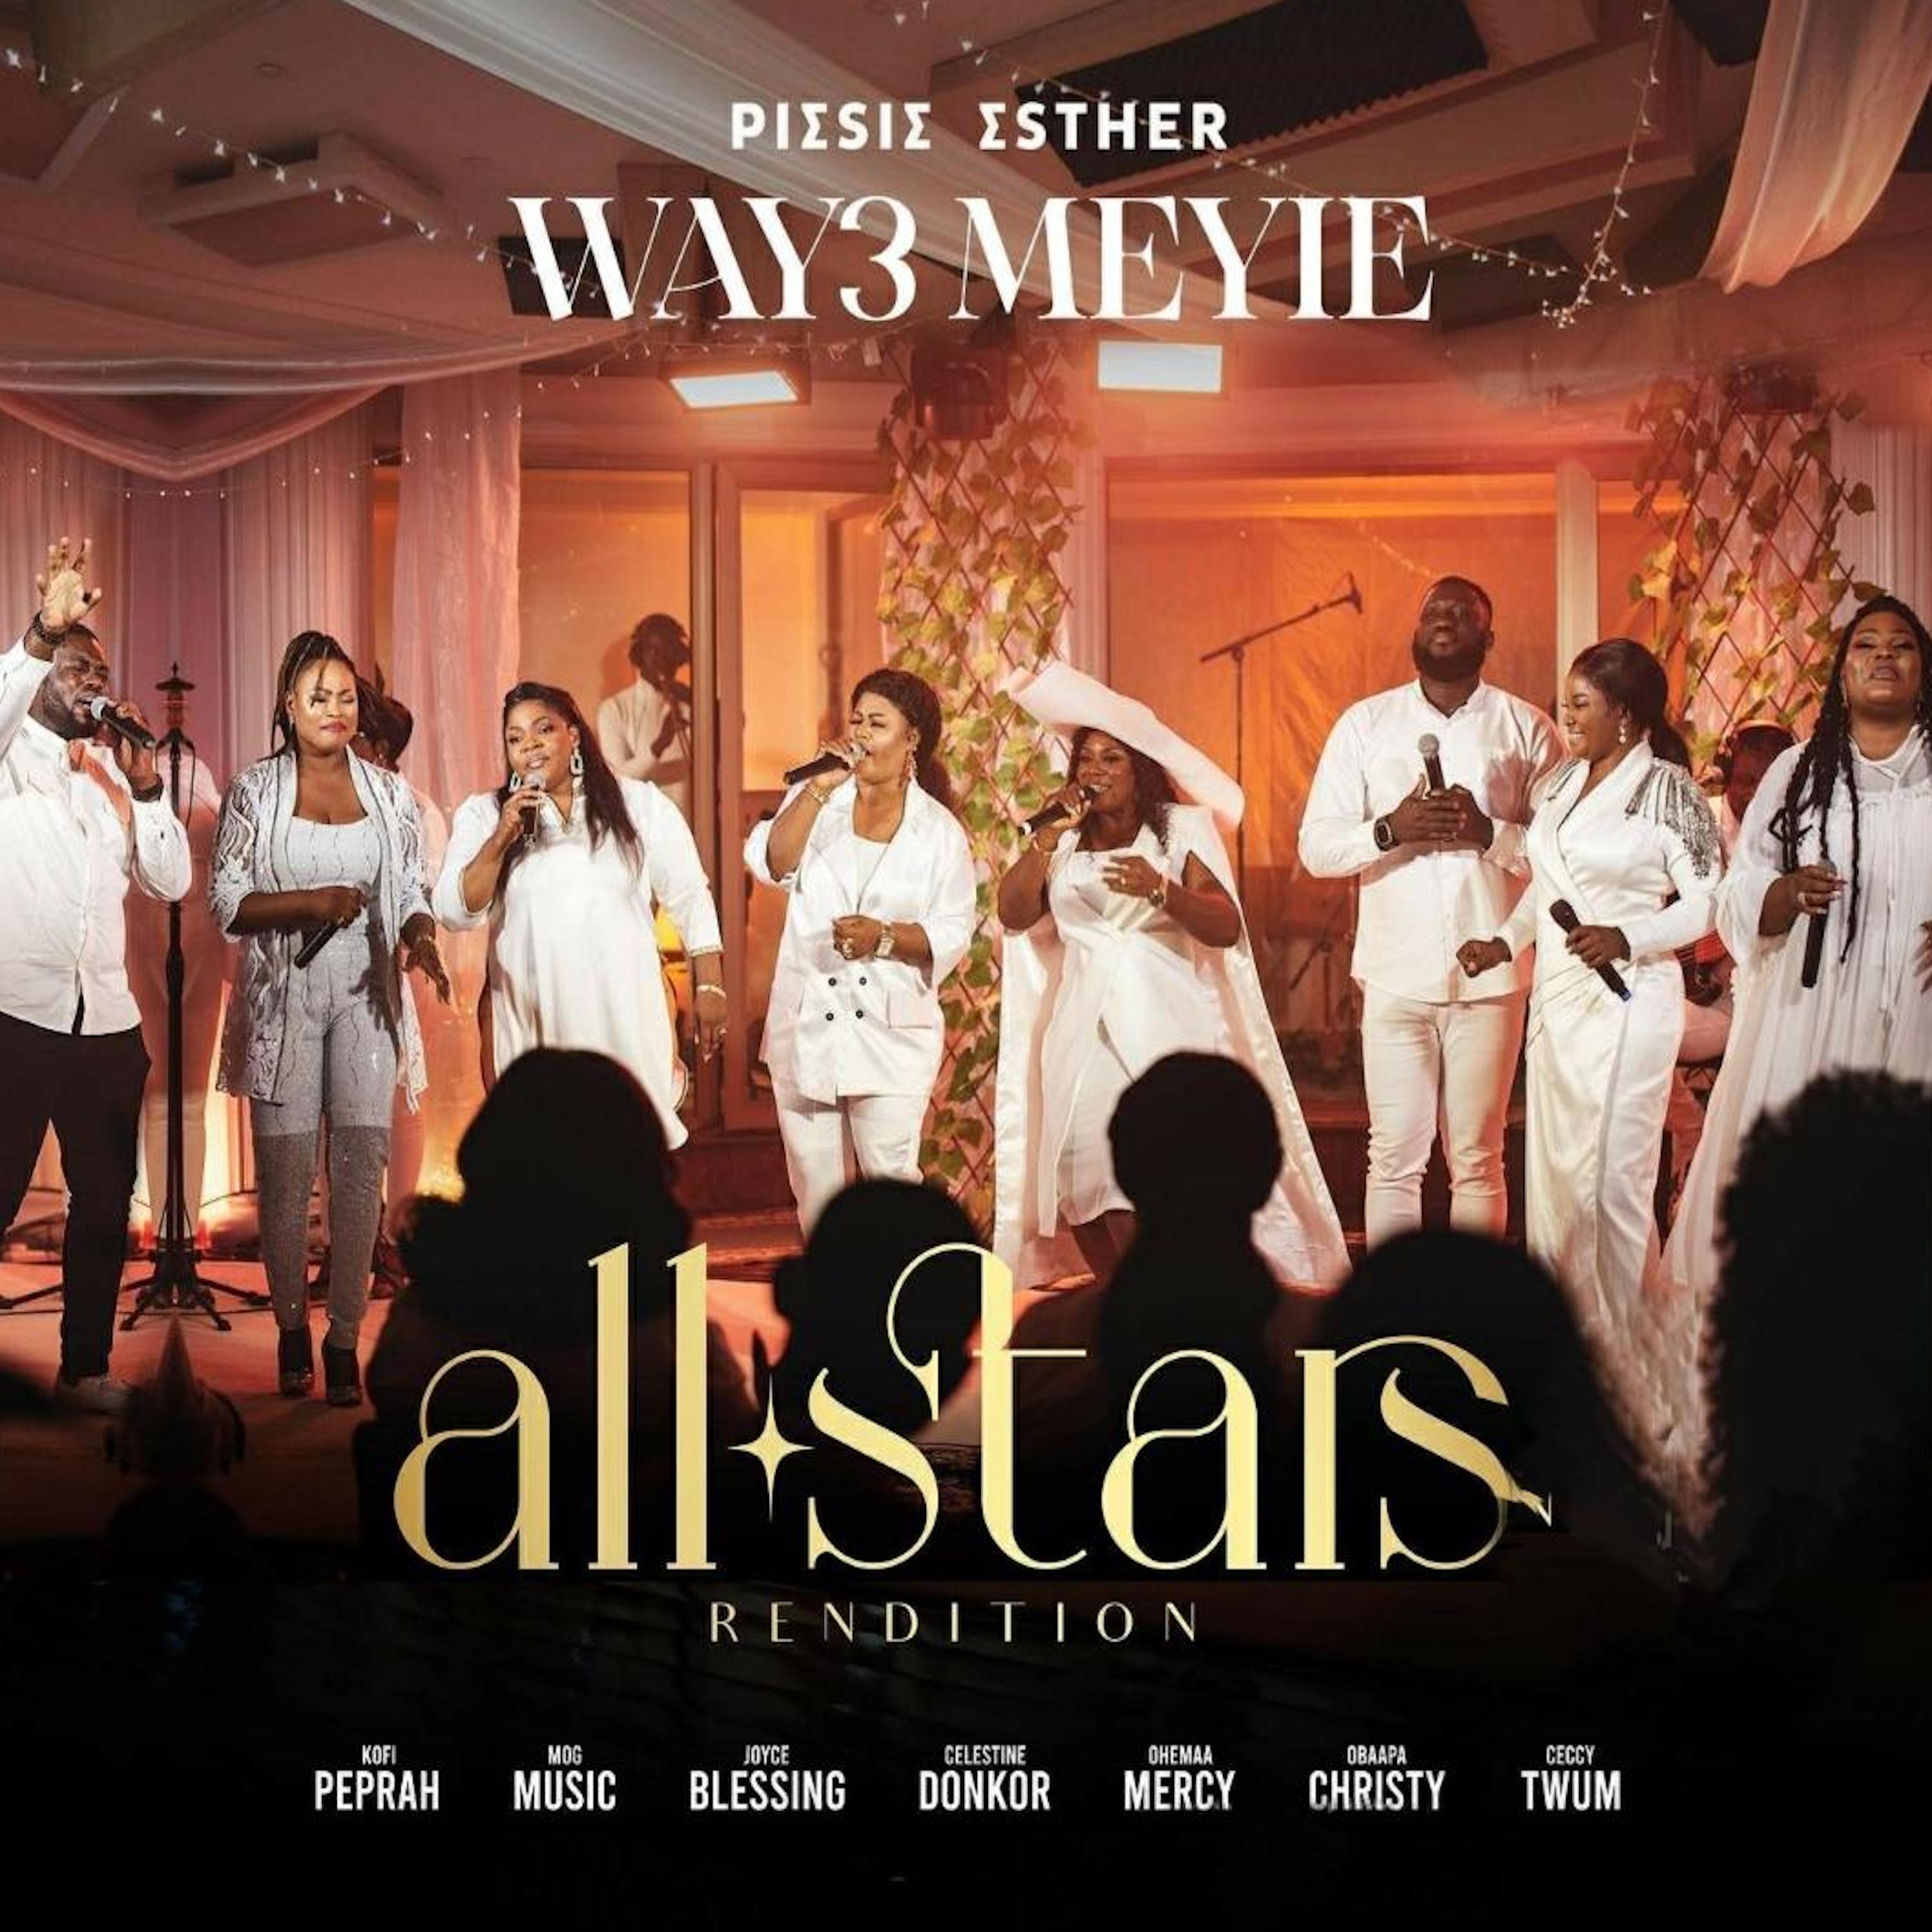 Piesie Esther Features Favorite Gospel Stars On  “Wayɛ Meyie” All Stars Rendition